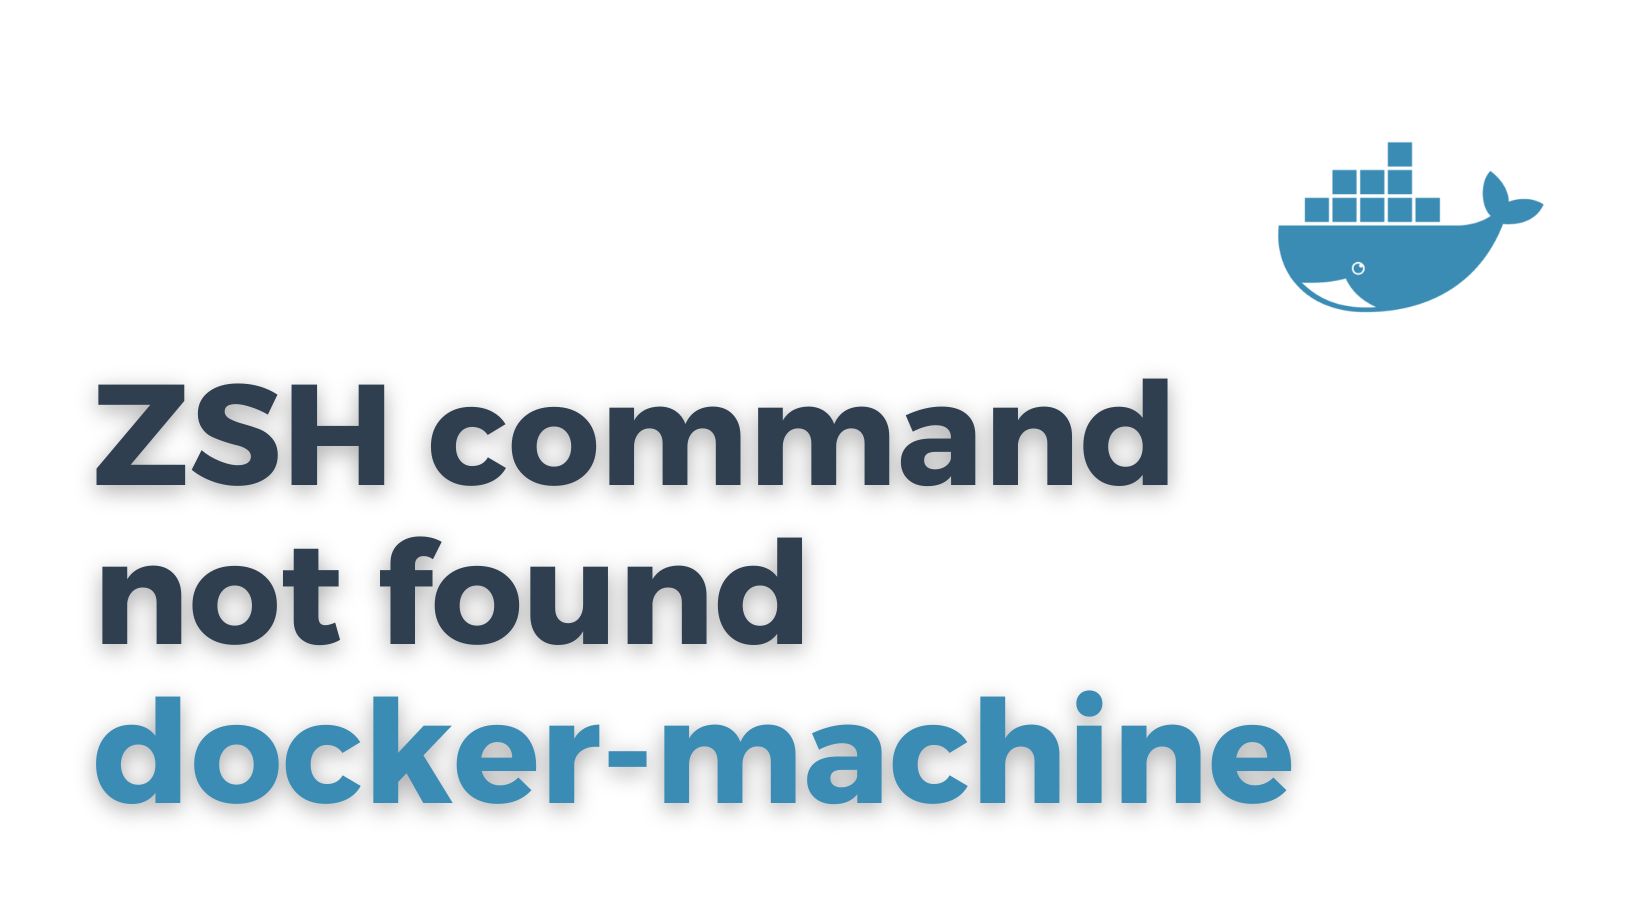 ZSH command not found docker-machine